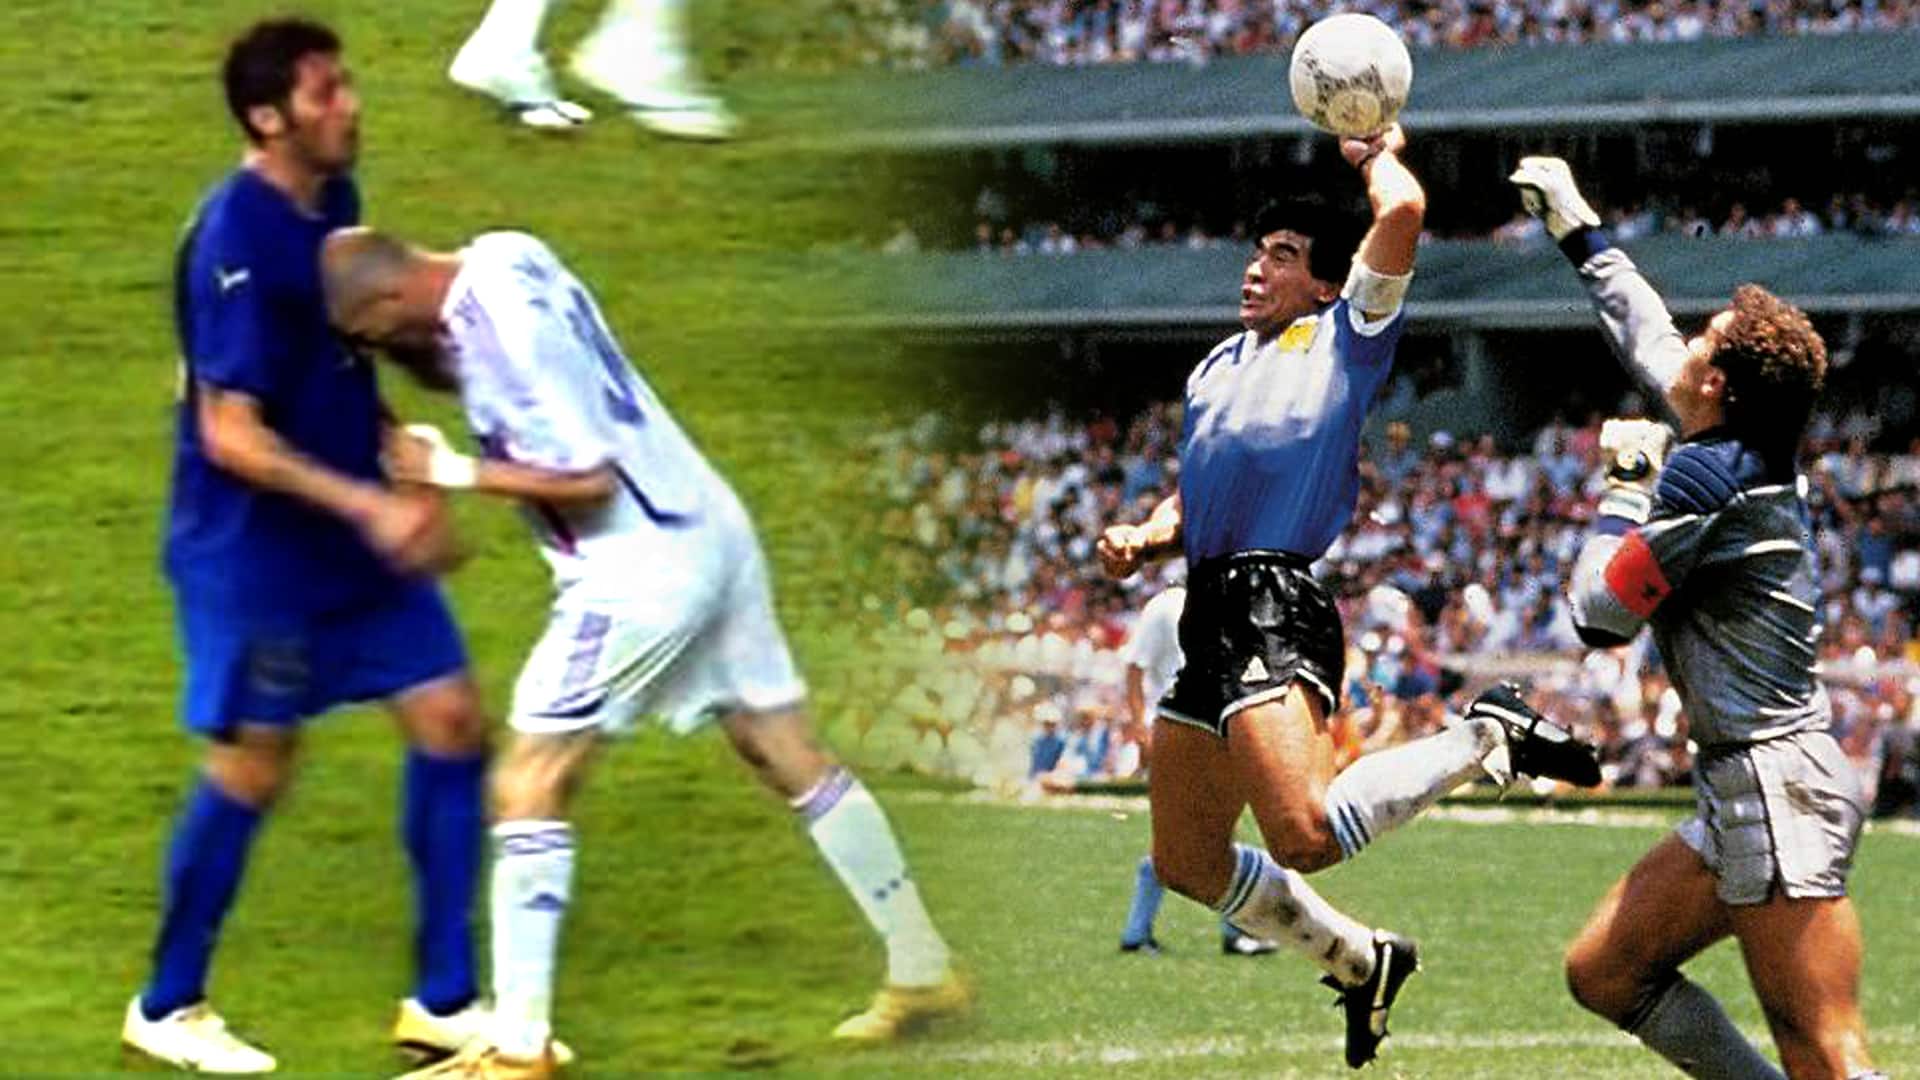 FIFA World Cup 2018: Maradona to Zidane Controversies